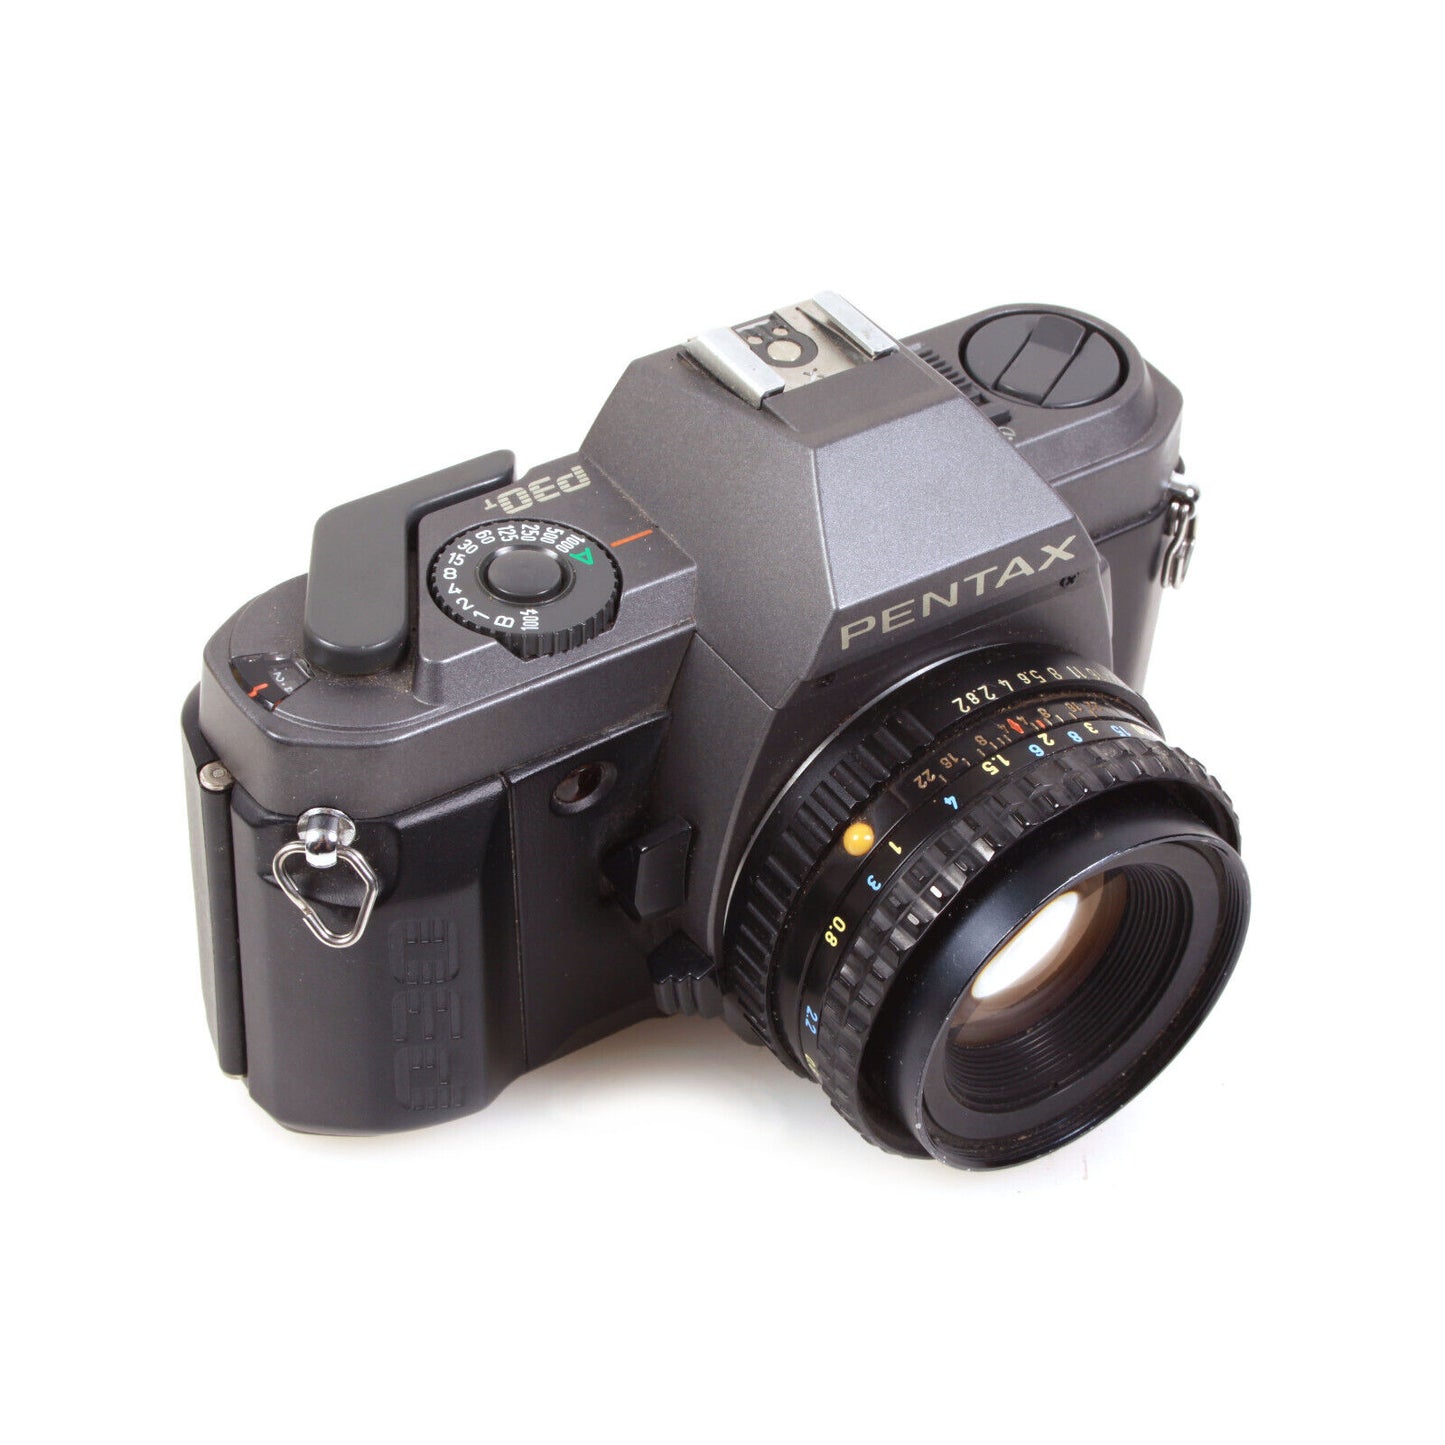 Pentax P30 35mm SLR Film Camera With 50mm F/2.8 Lens